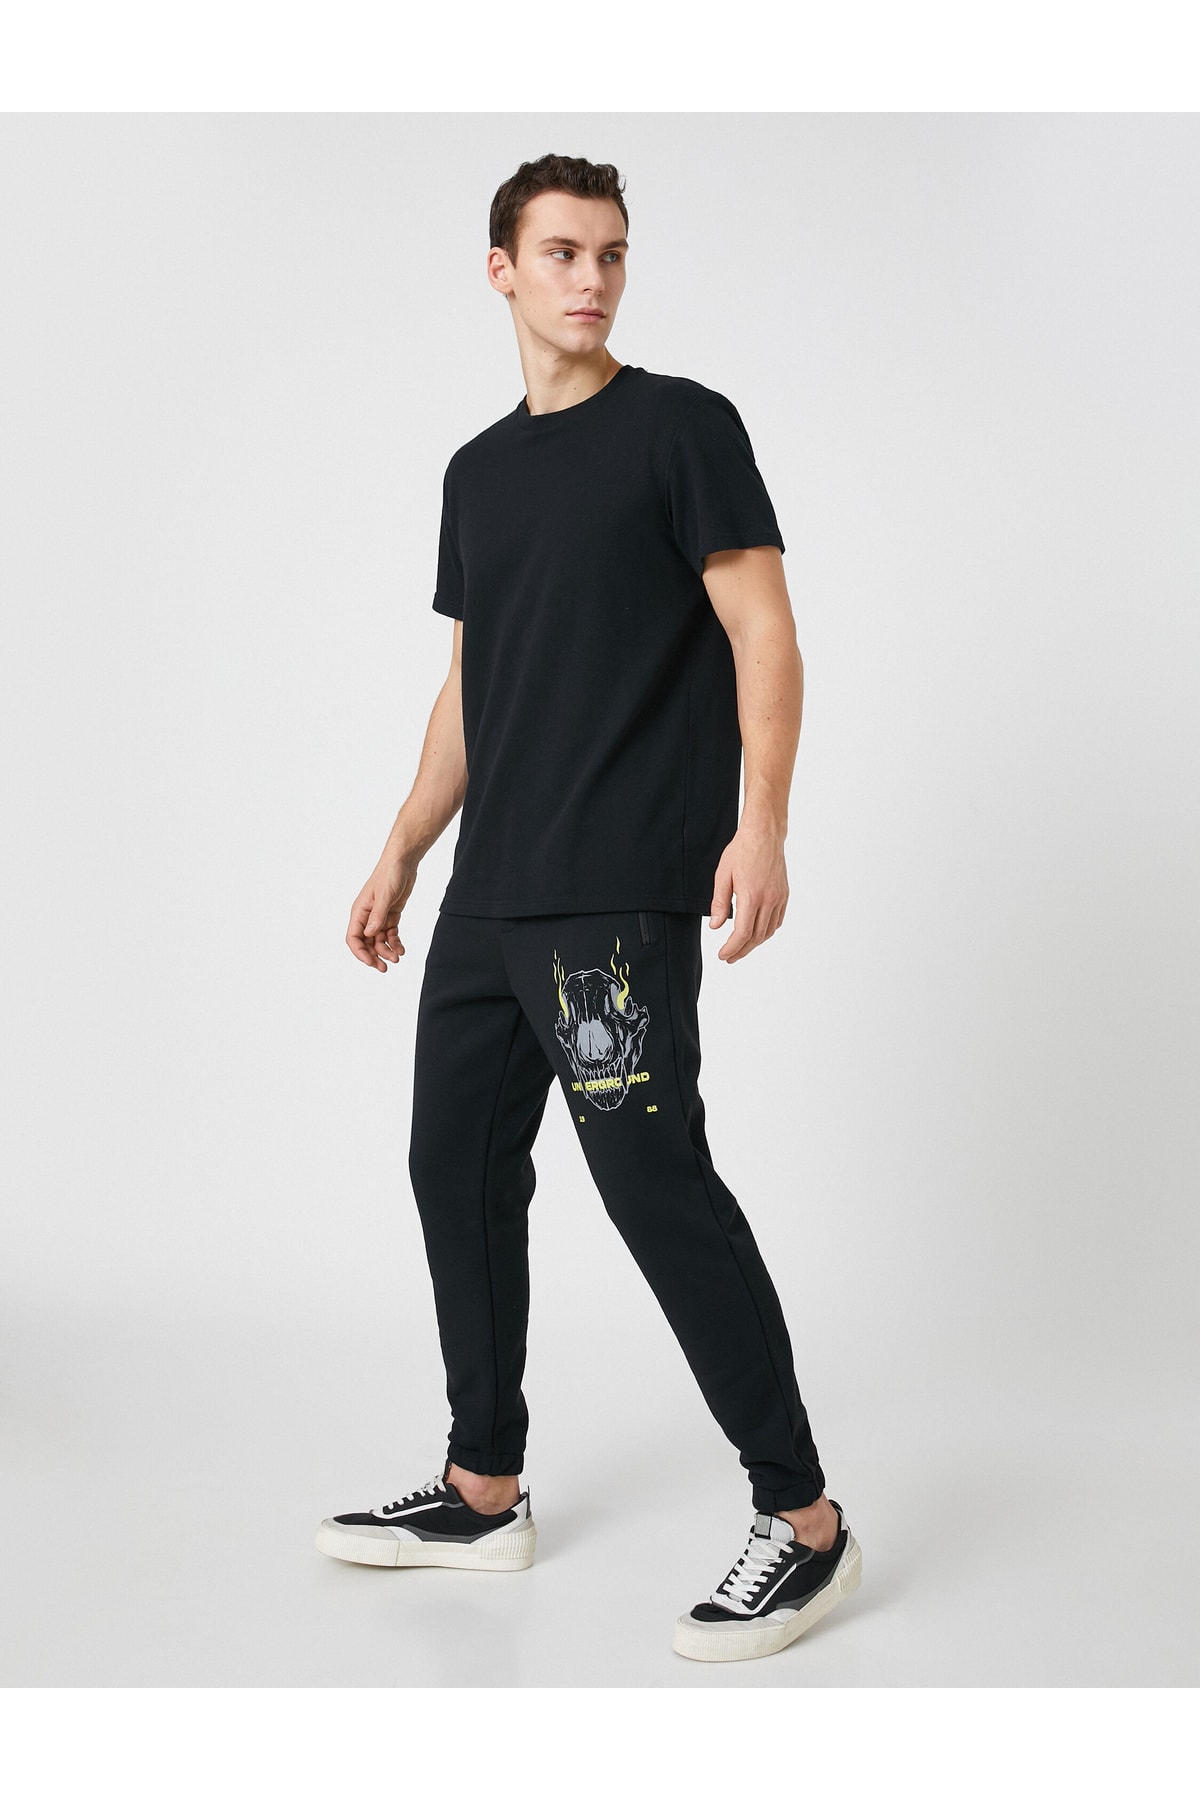 Levně Koton Jogger Sweatpants with a skull print, zippered pockets, Lace-Up Waist.